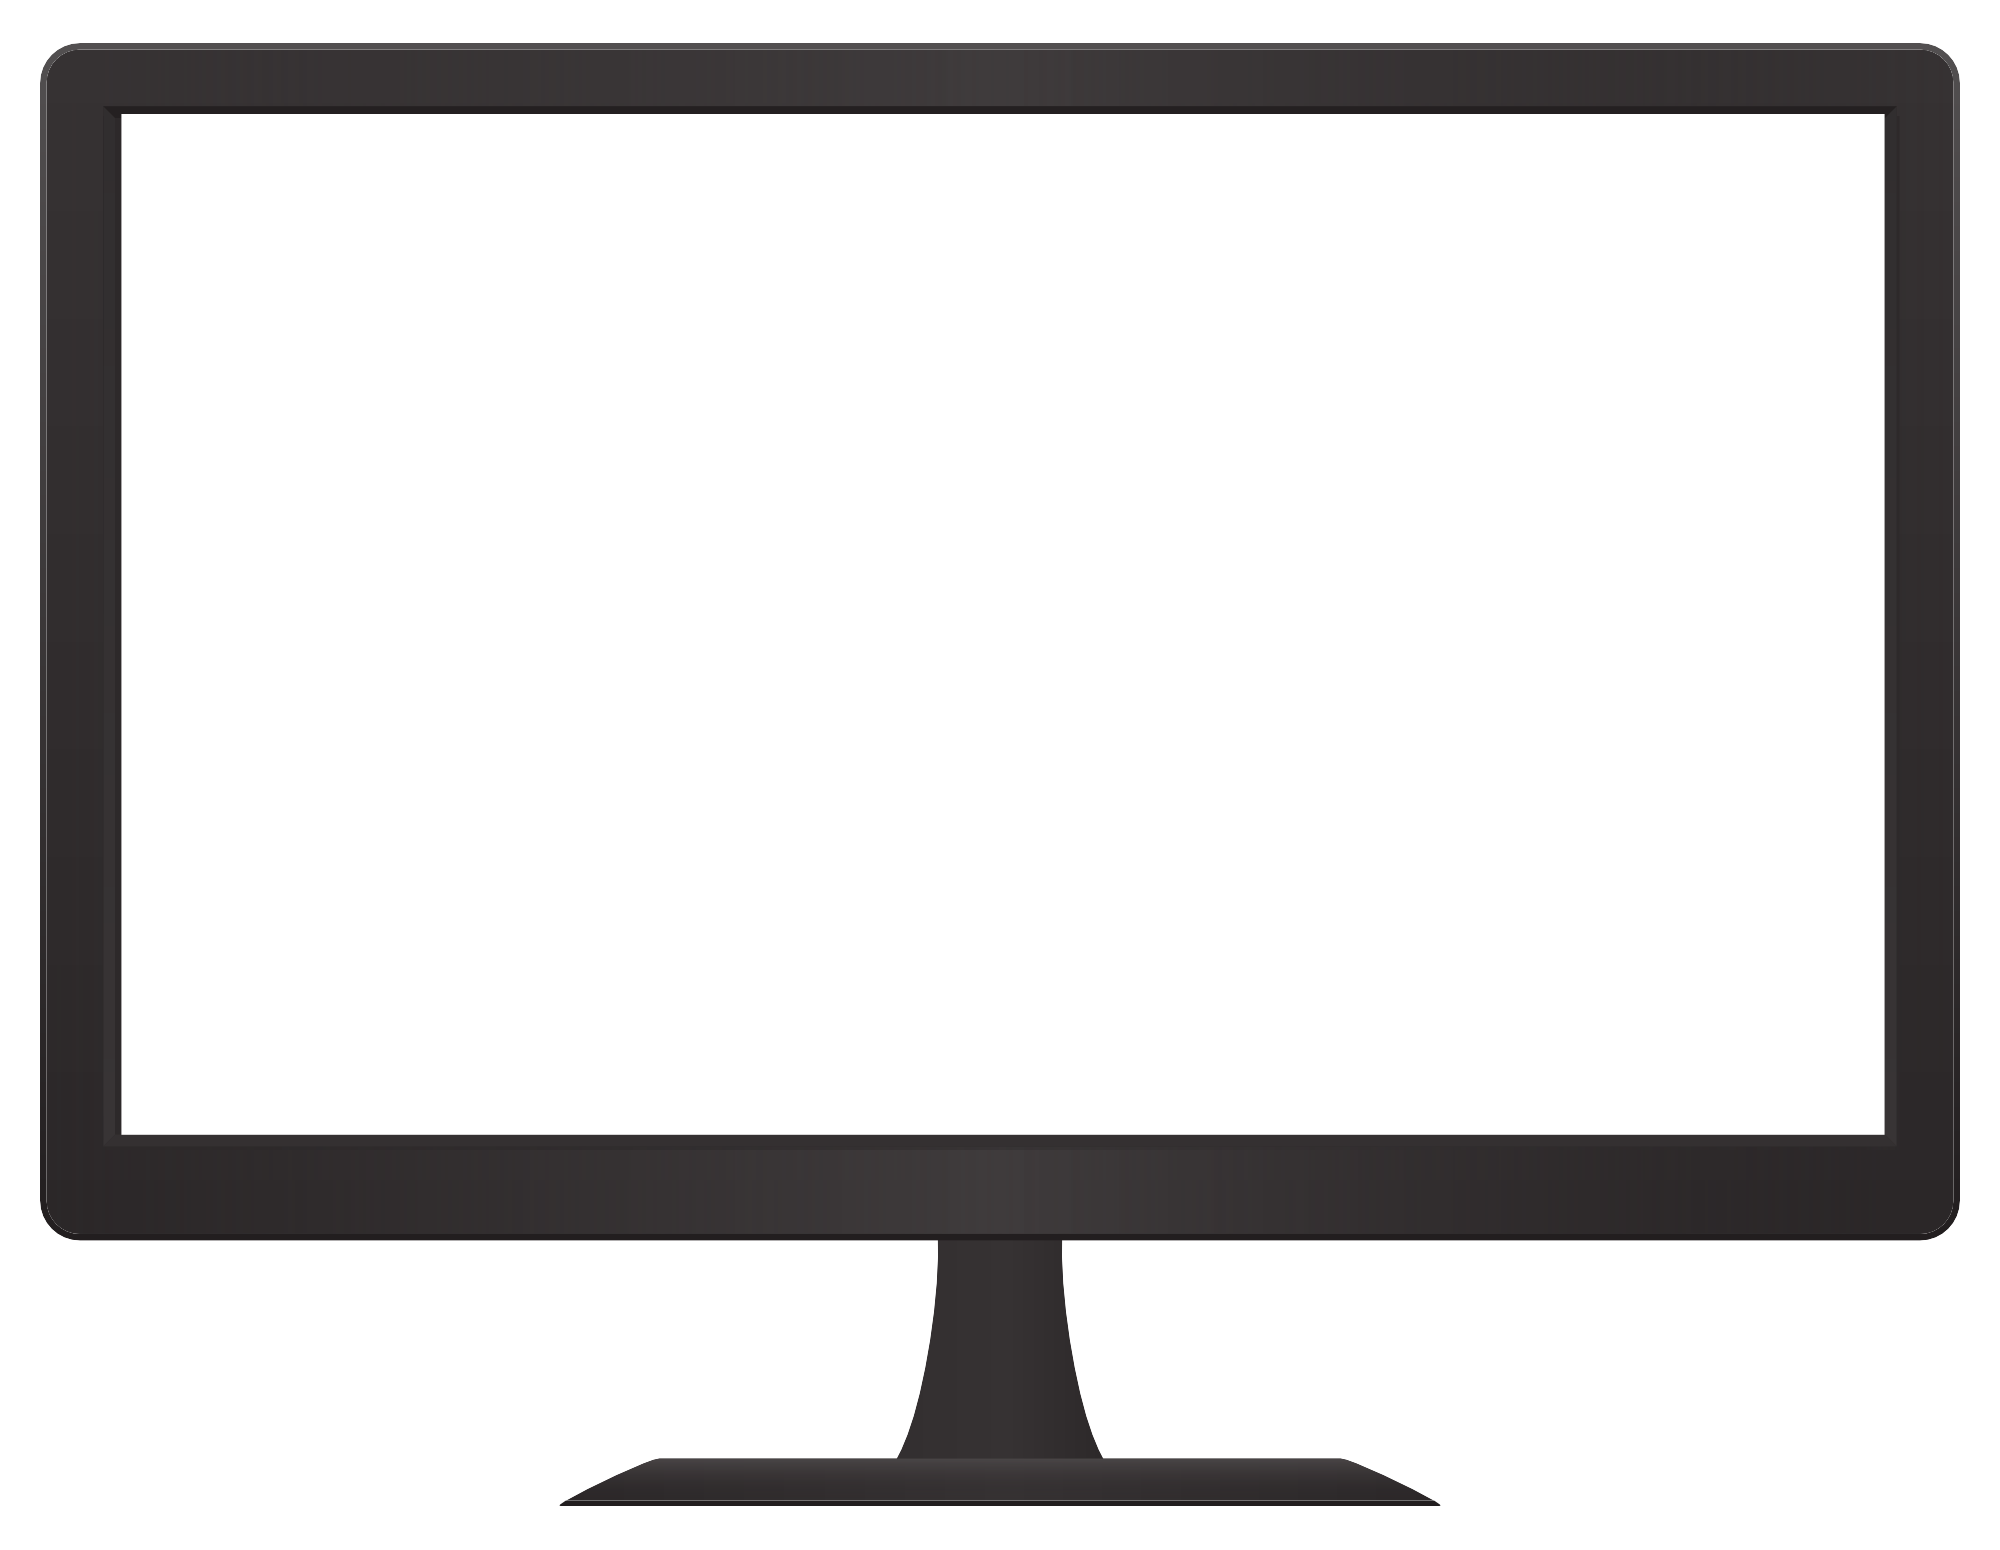 Monitor PNG Image